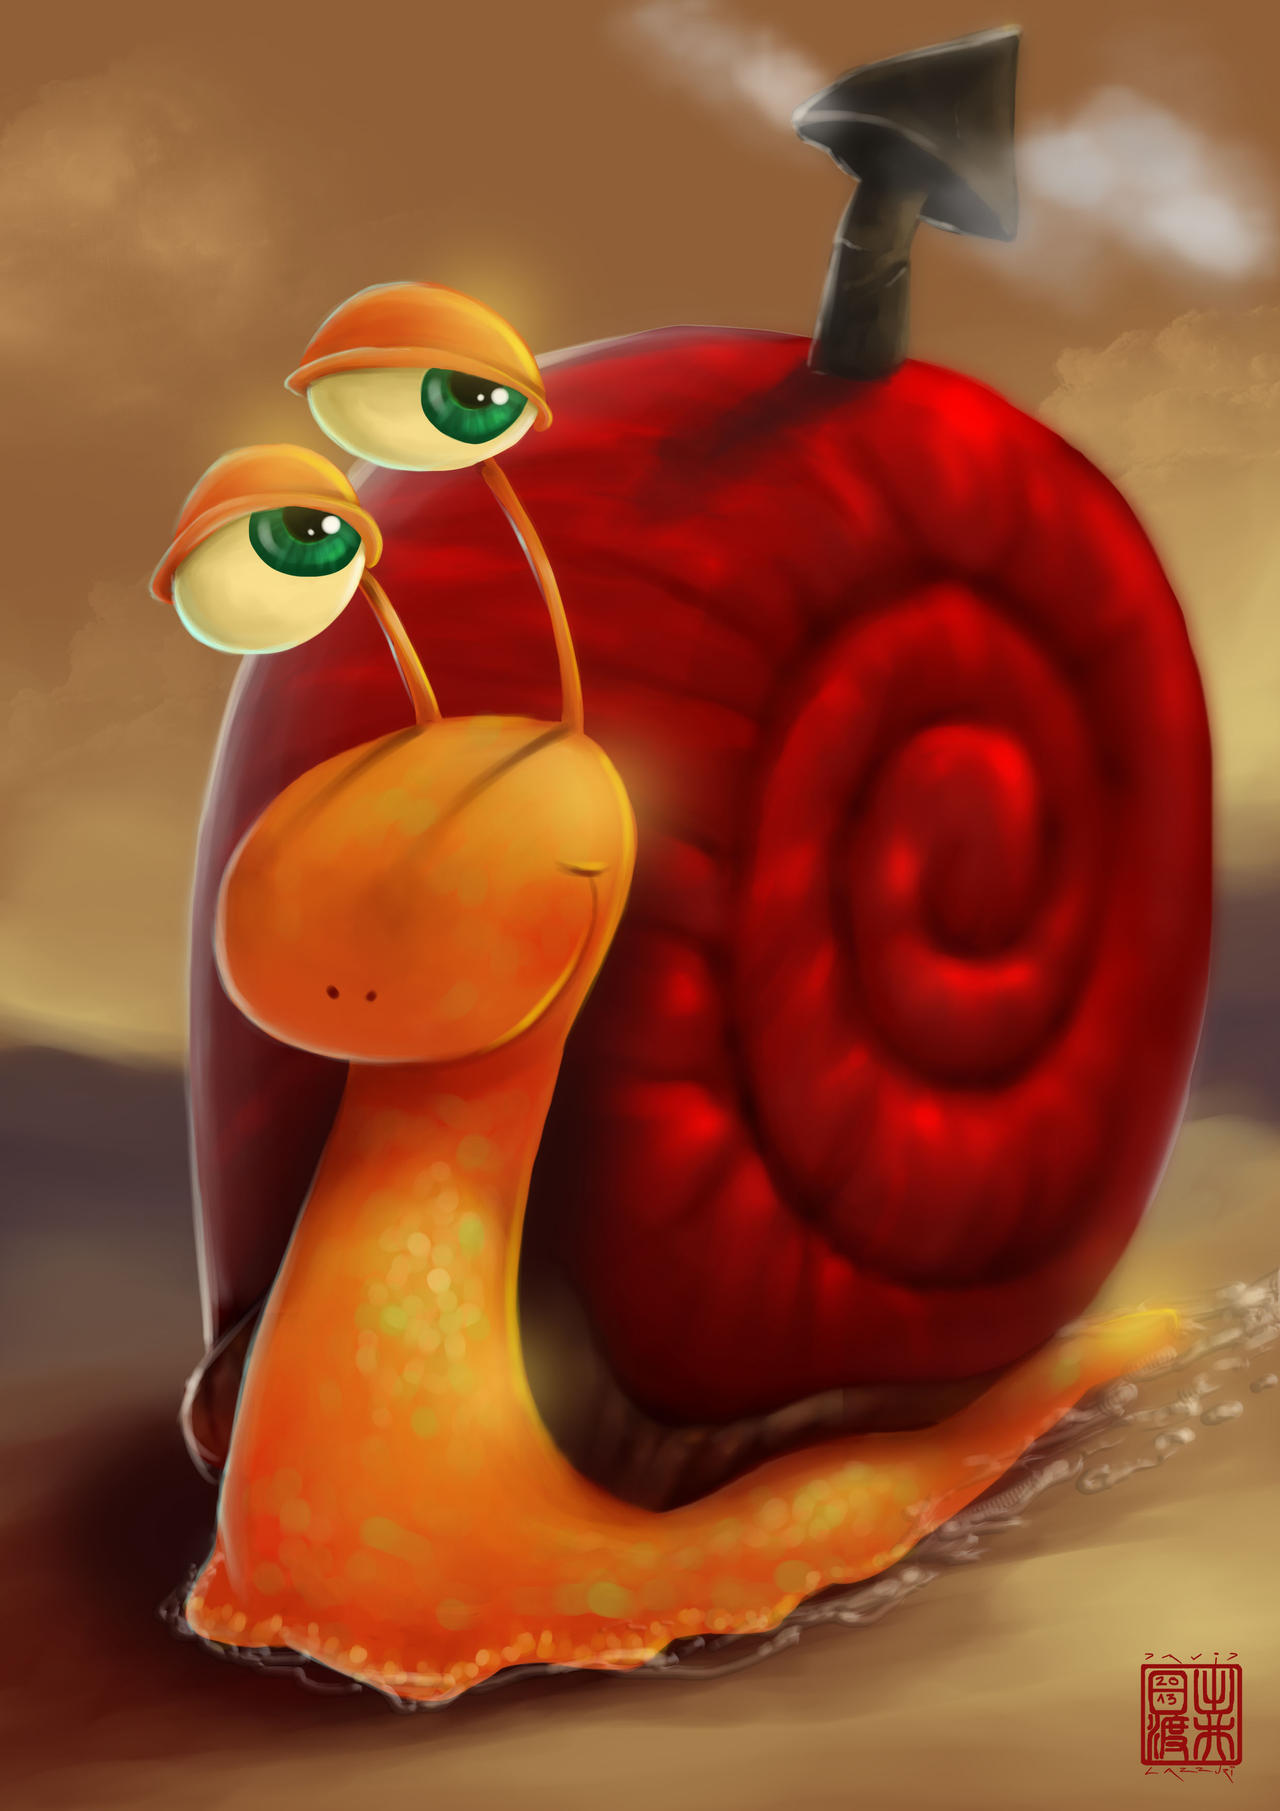 Caracol / snail